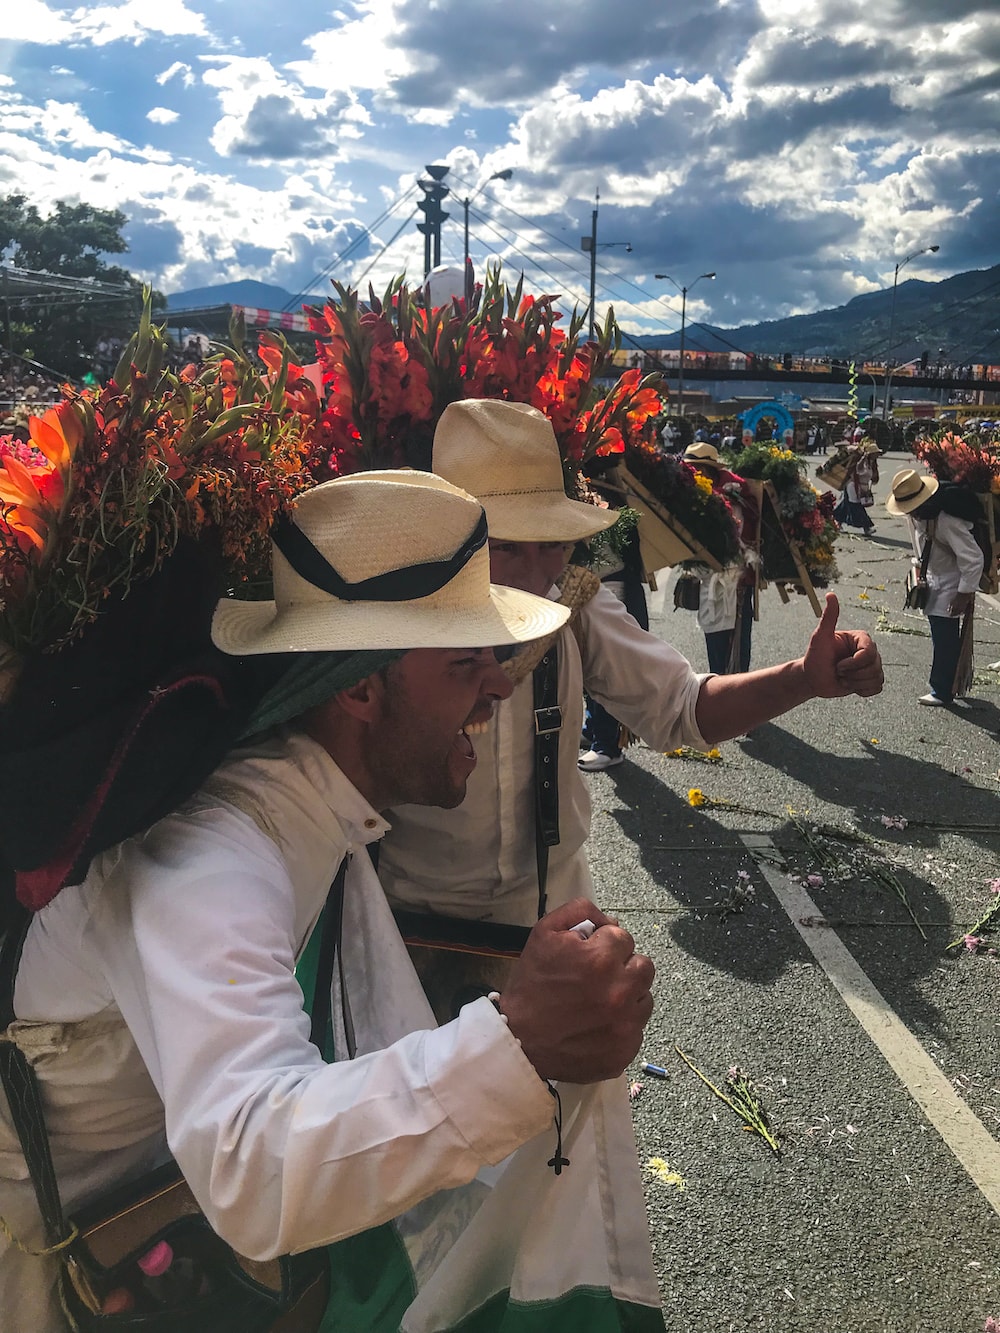 spirited silleteros at the flower festival parade in Medellin